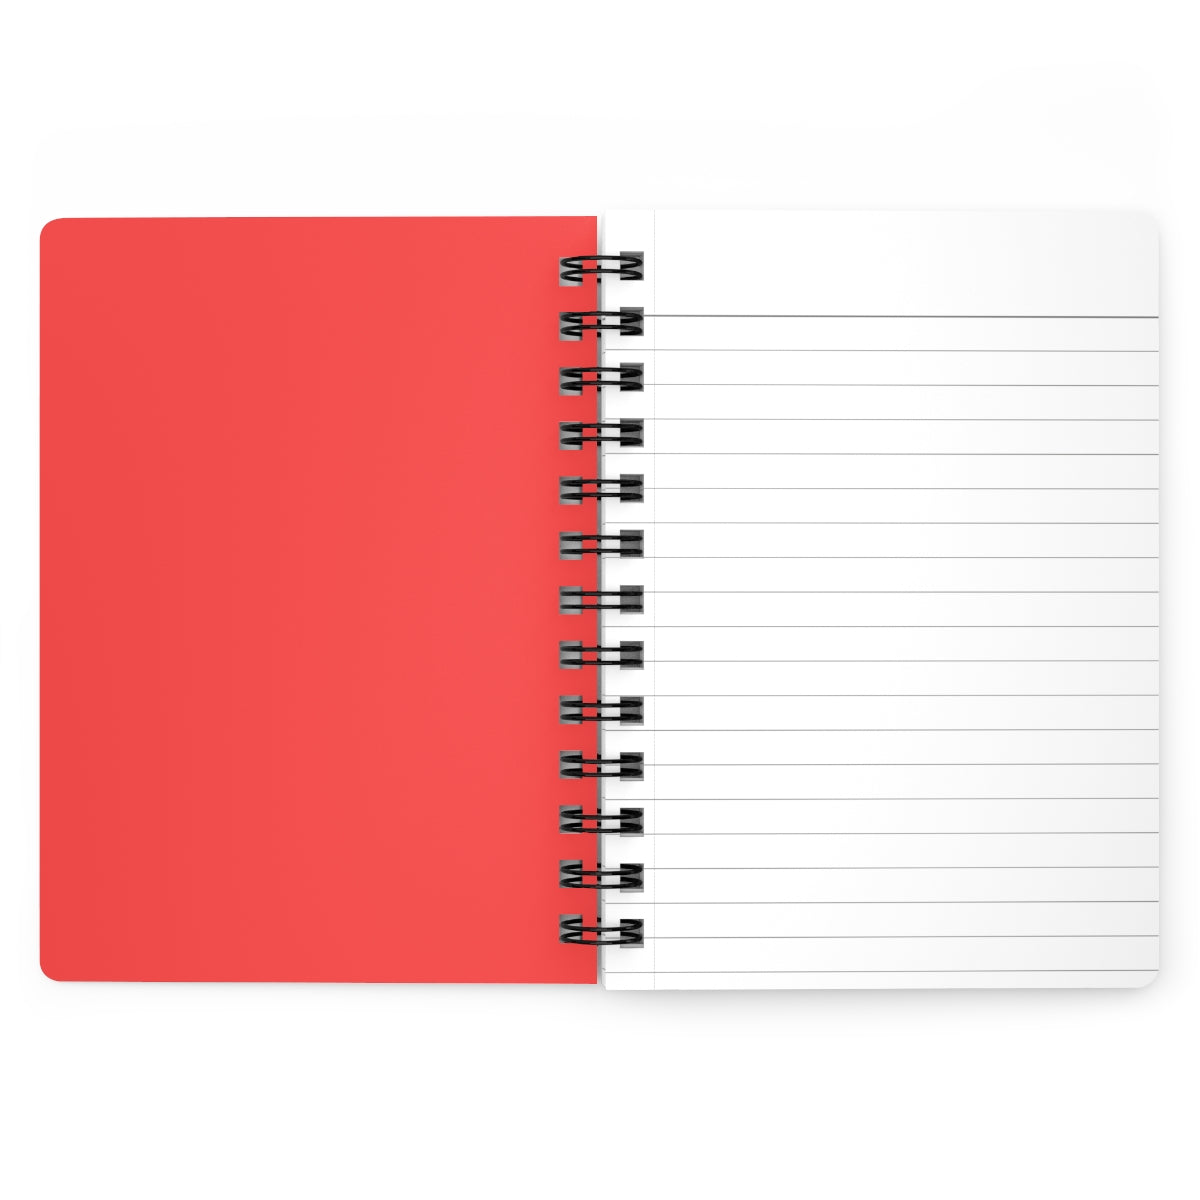 Red Leather Print Spiral Bound Journal